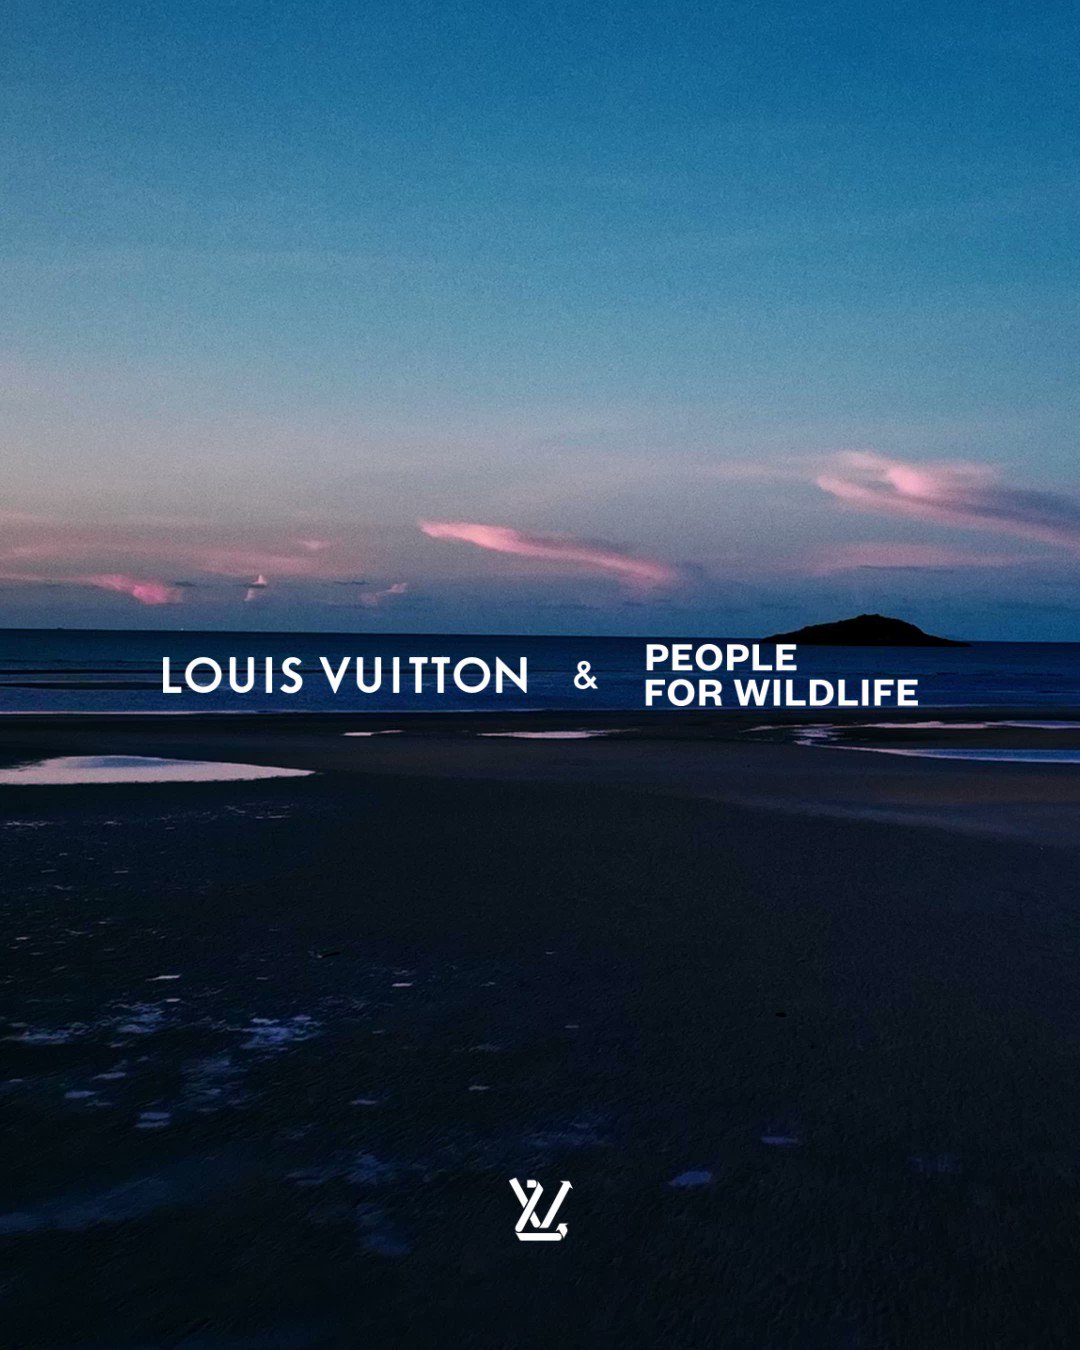 Louis Vuitton on X: #LouisVuitton & People For Wildlife. As